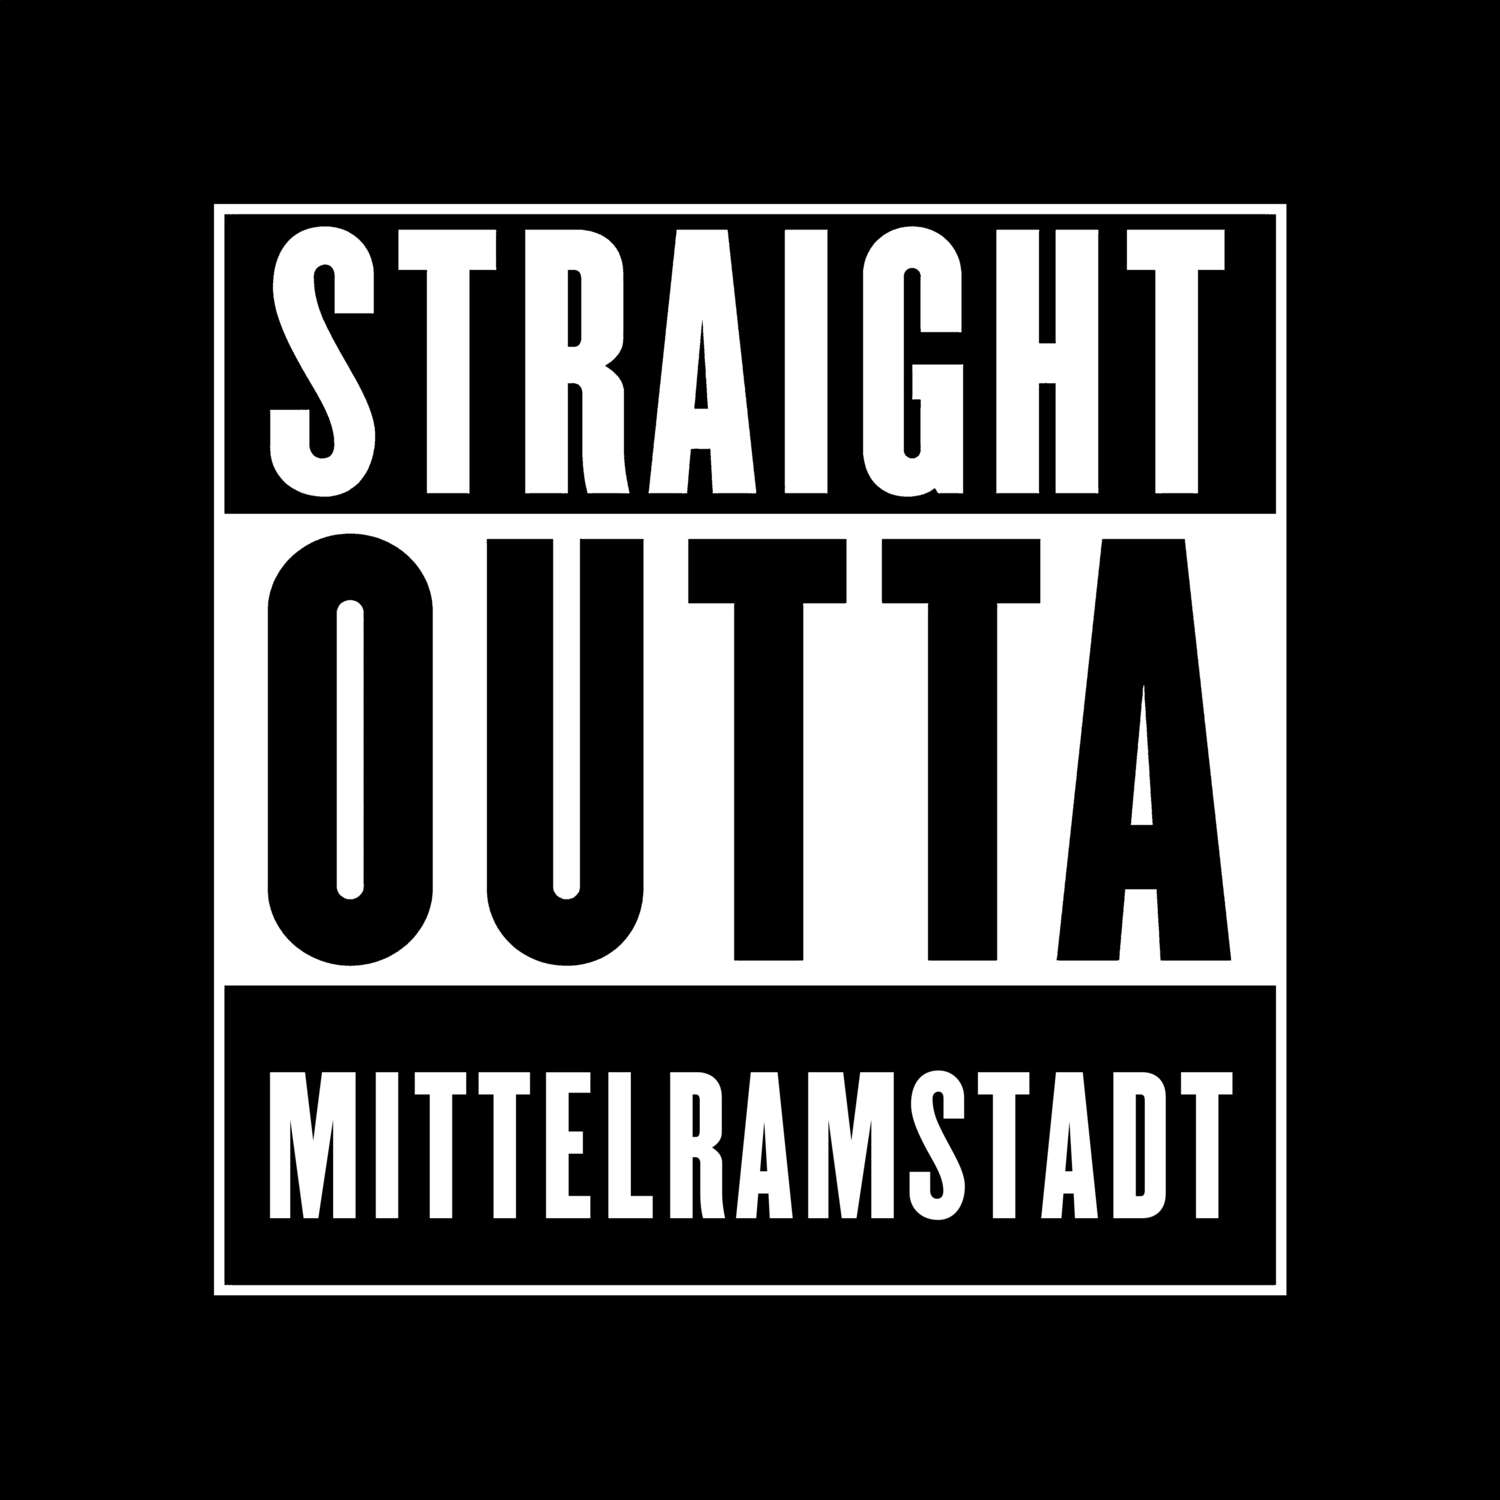 Mittelramstadt T-Shirt »Straight Outta«